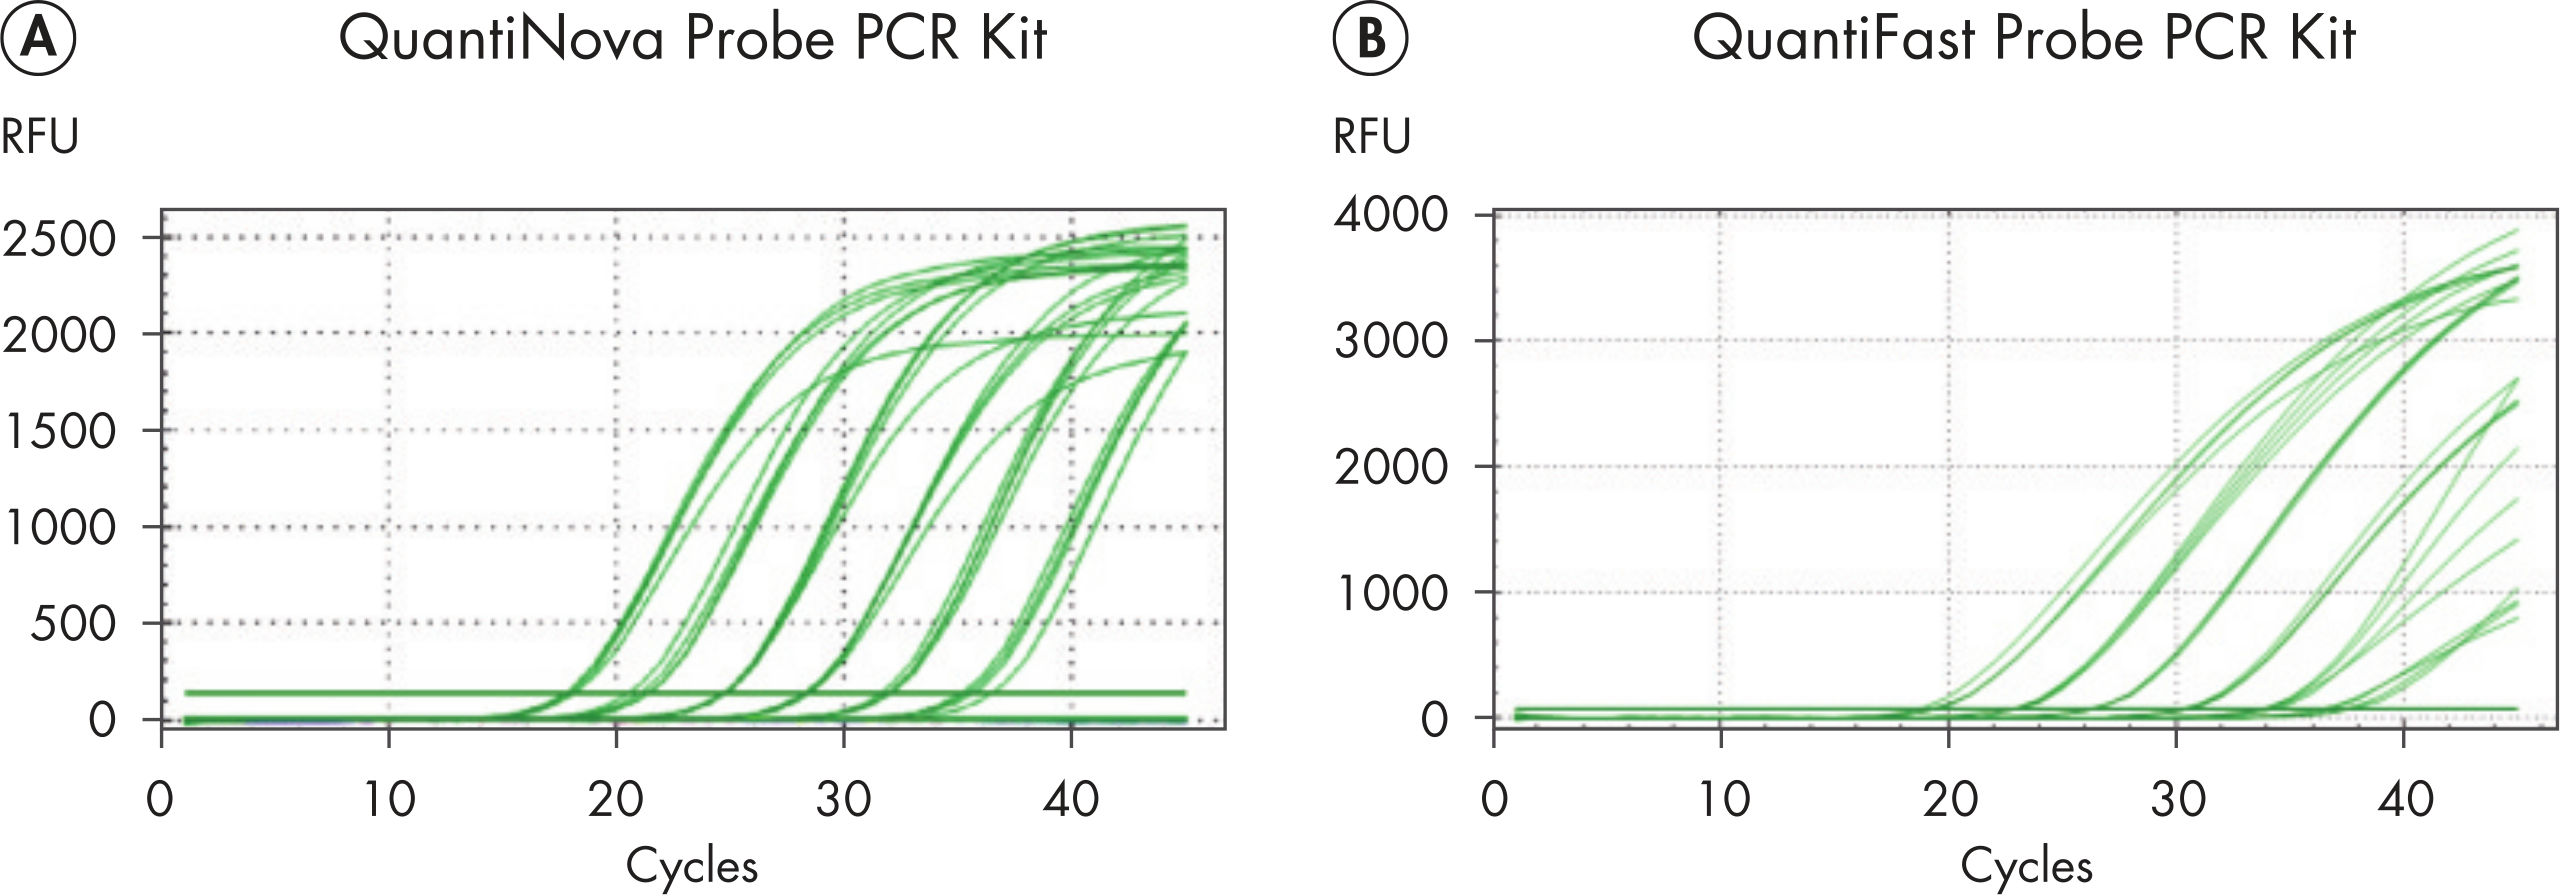 QuantiNova PCR Kits